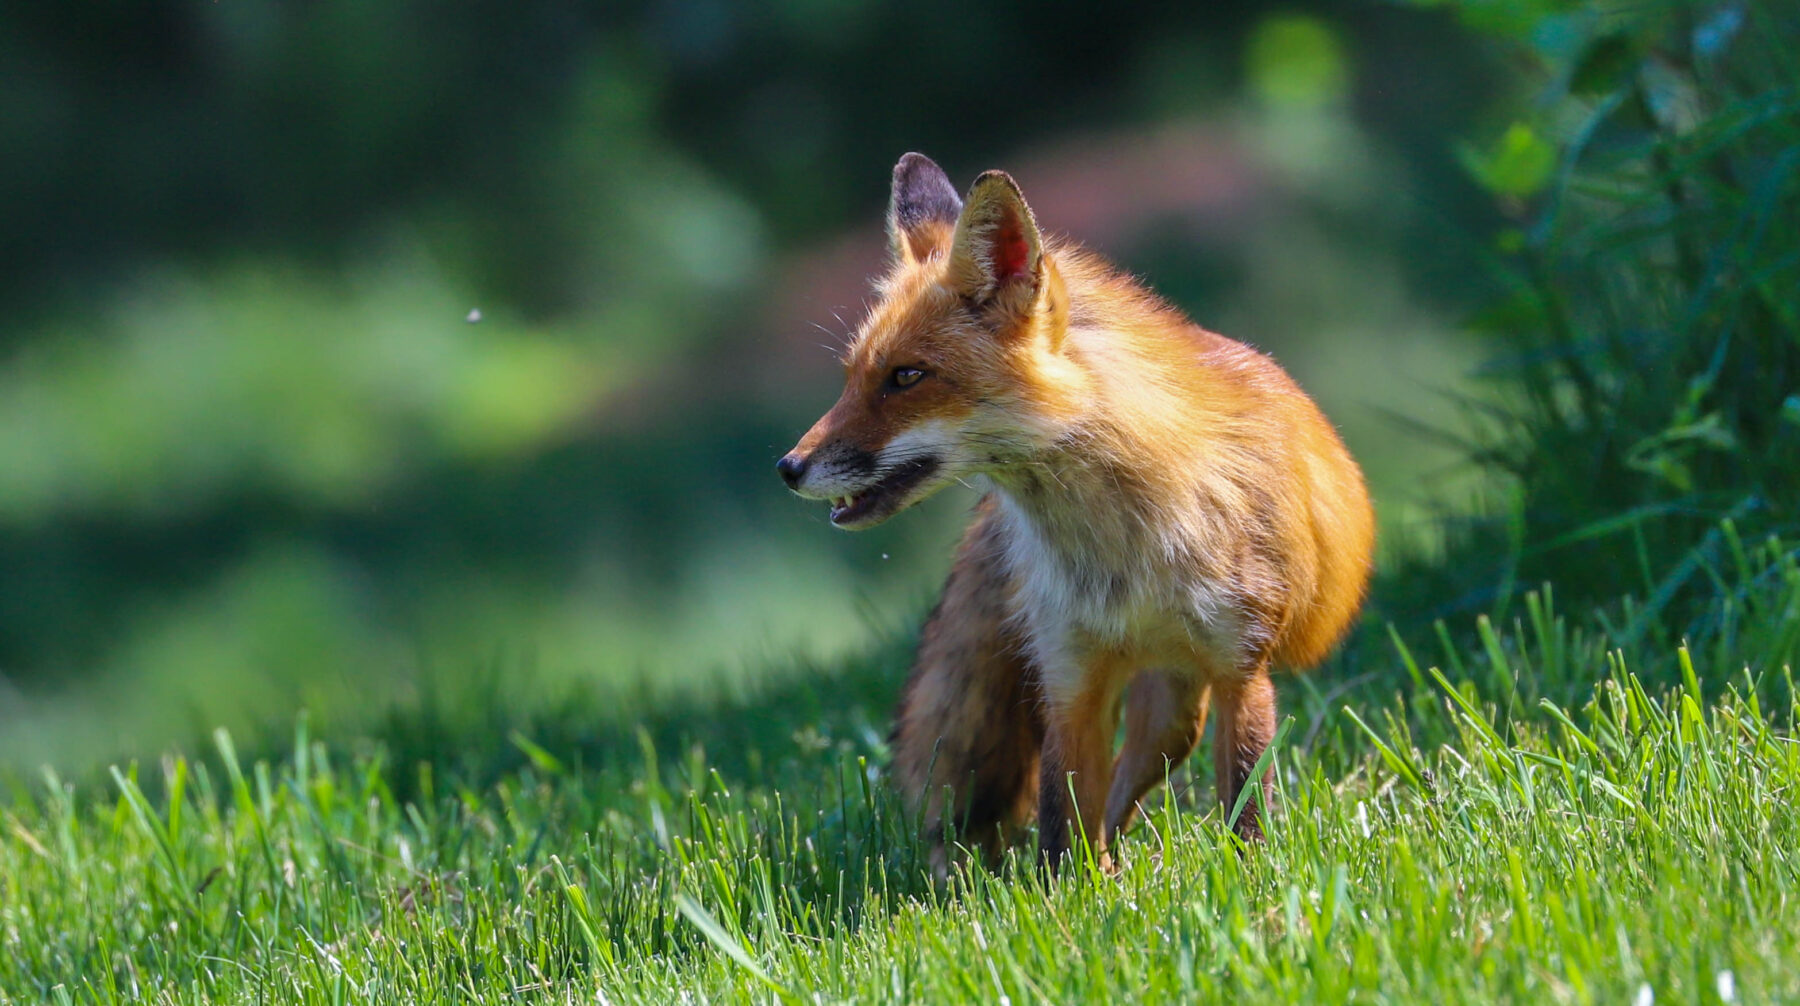 Red Fox standing in grass